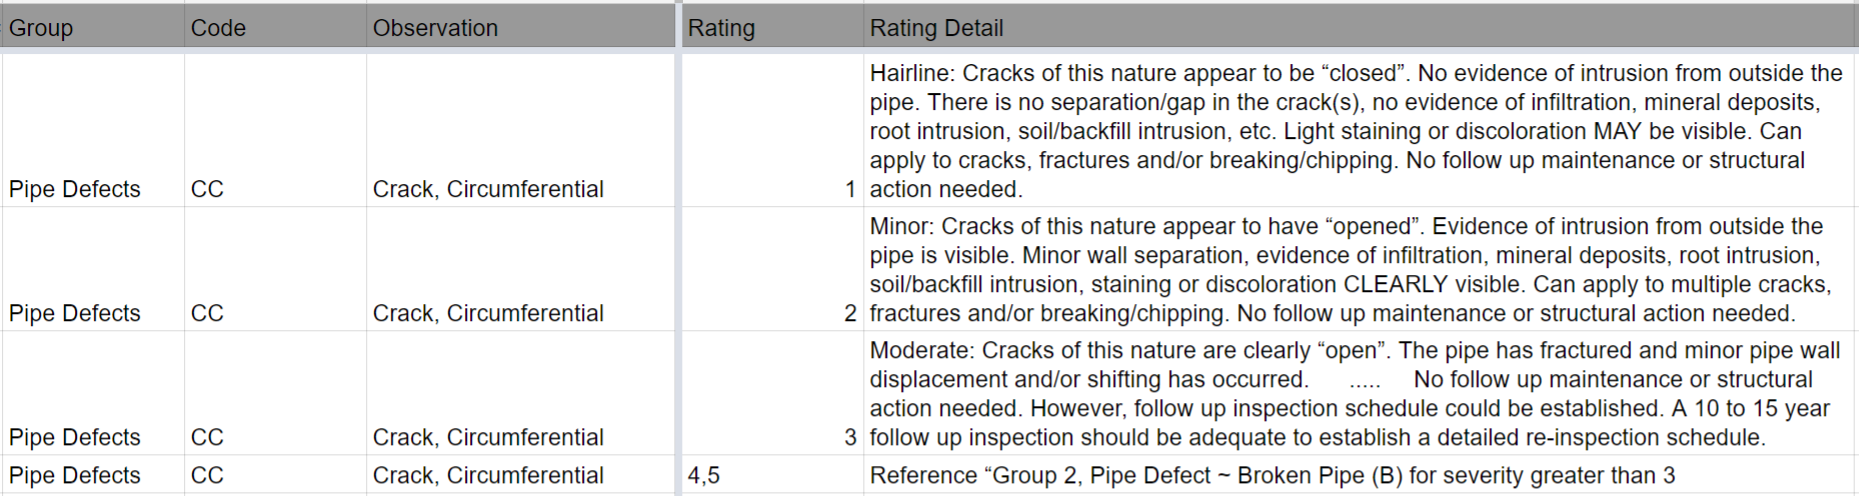 pipe observation crack circumferential code 2